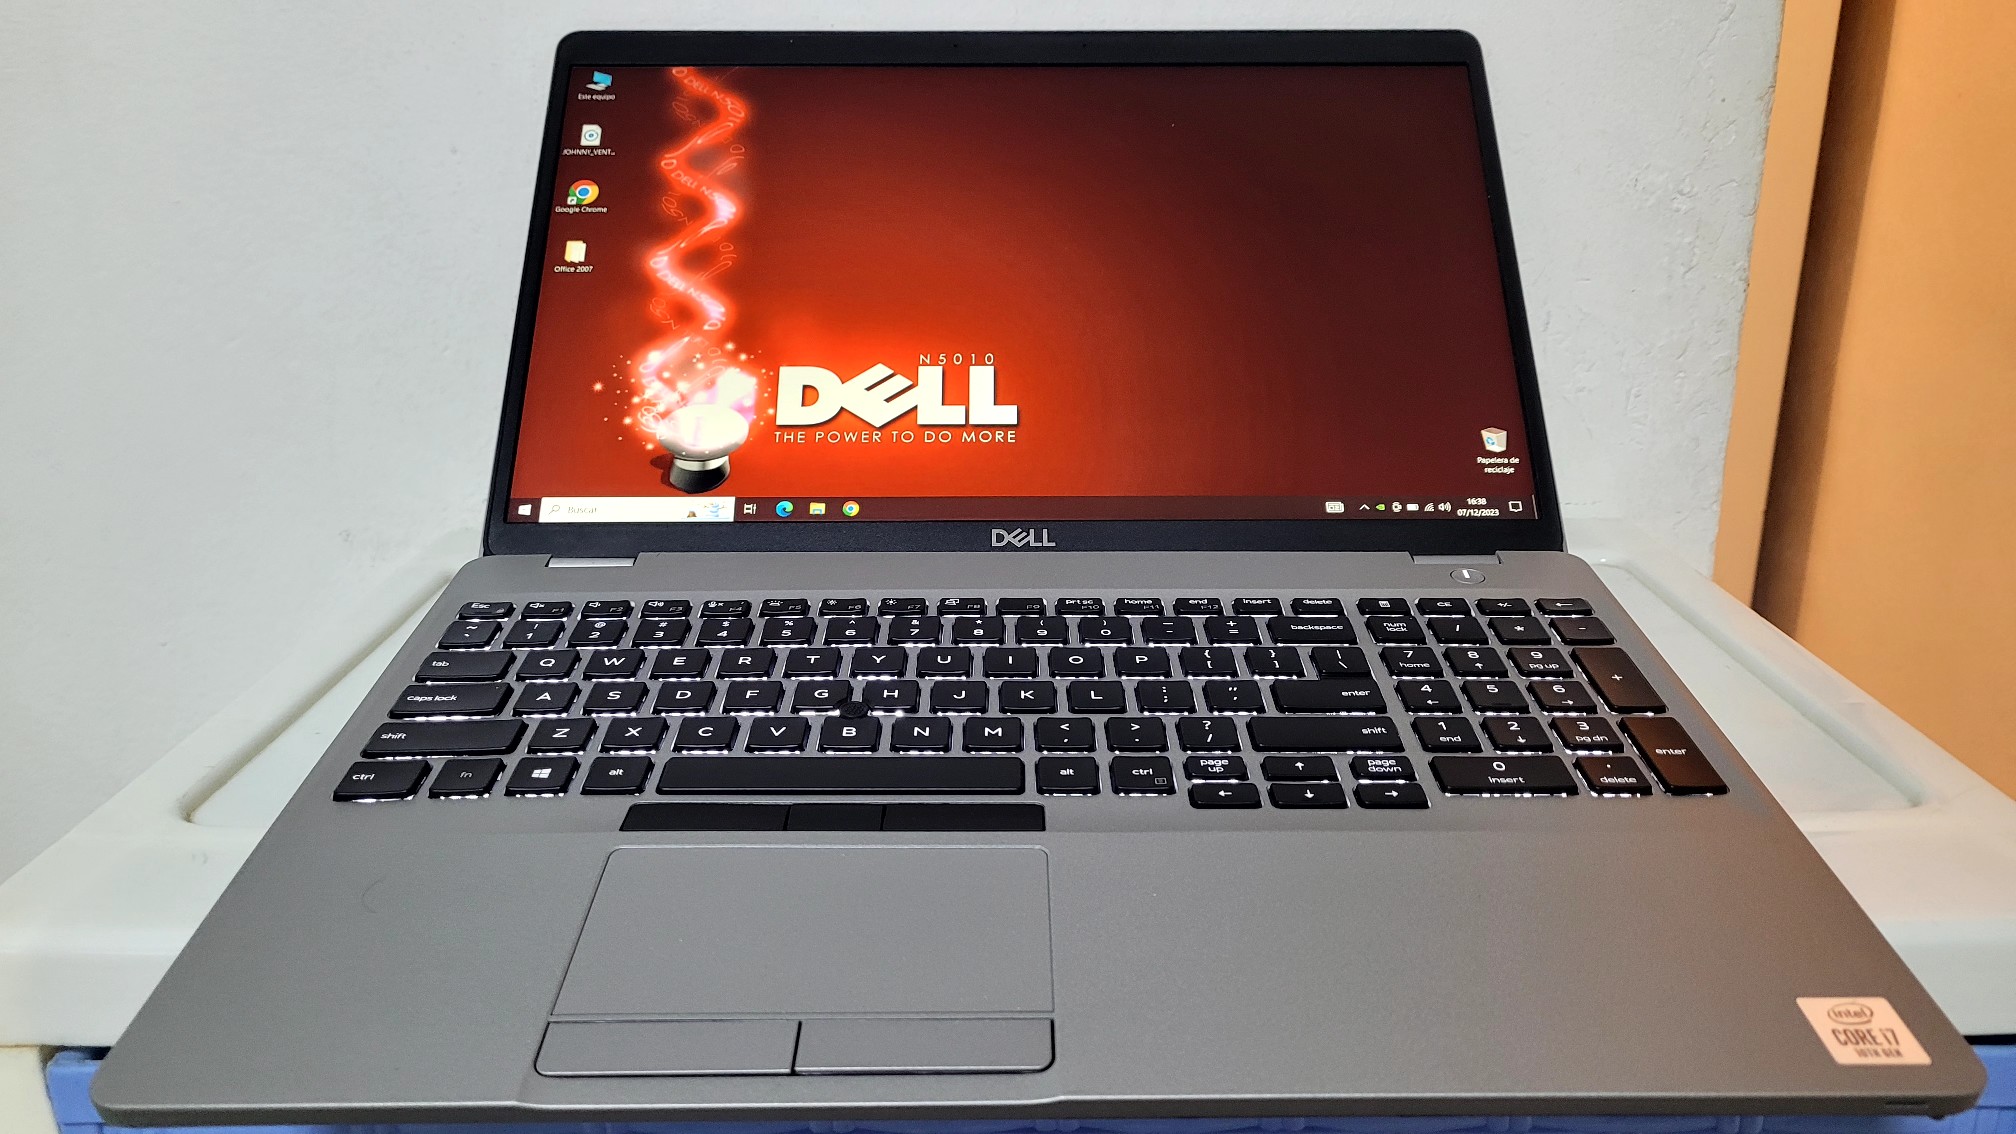 computadoras y laptops - Dell 3550 17 Pulg Core i7 10ma Gen Ram 16gb ddr4 Disco m2 256gb Nvidea 10gb